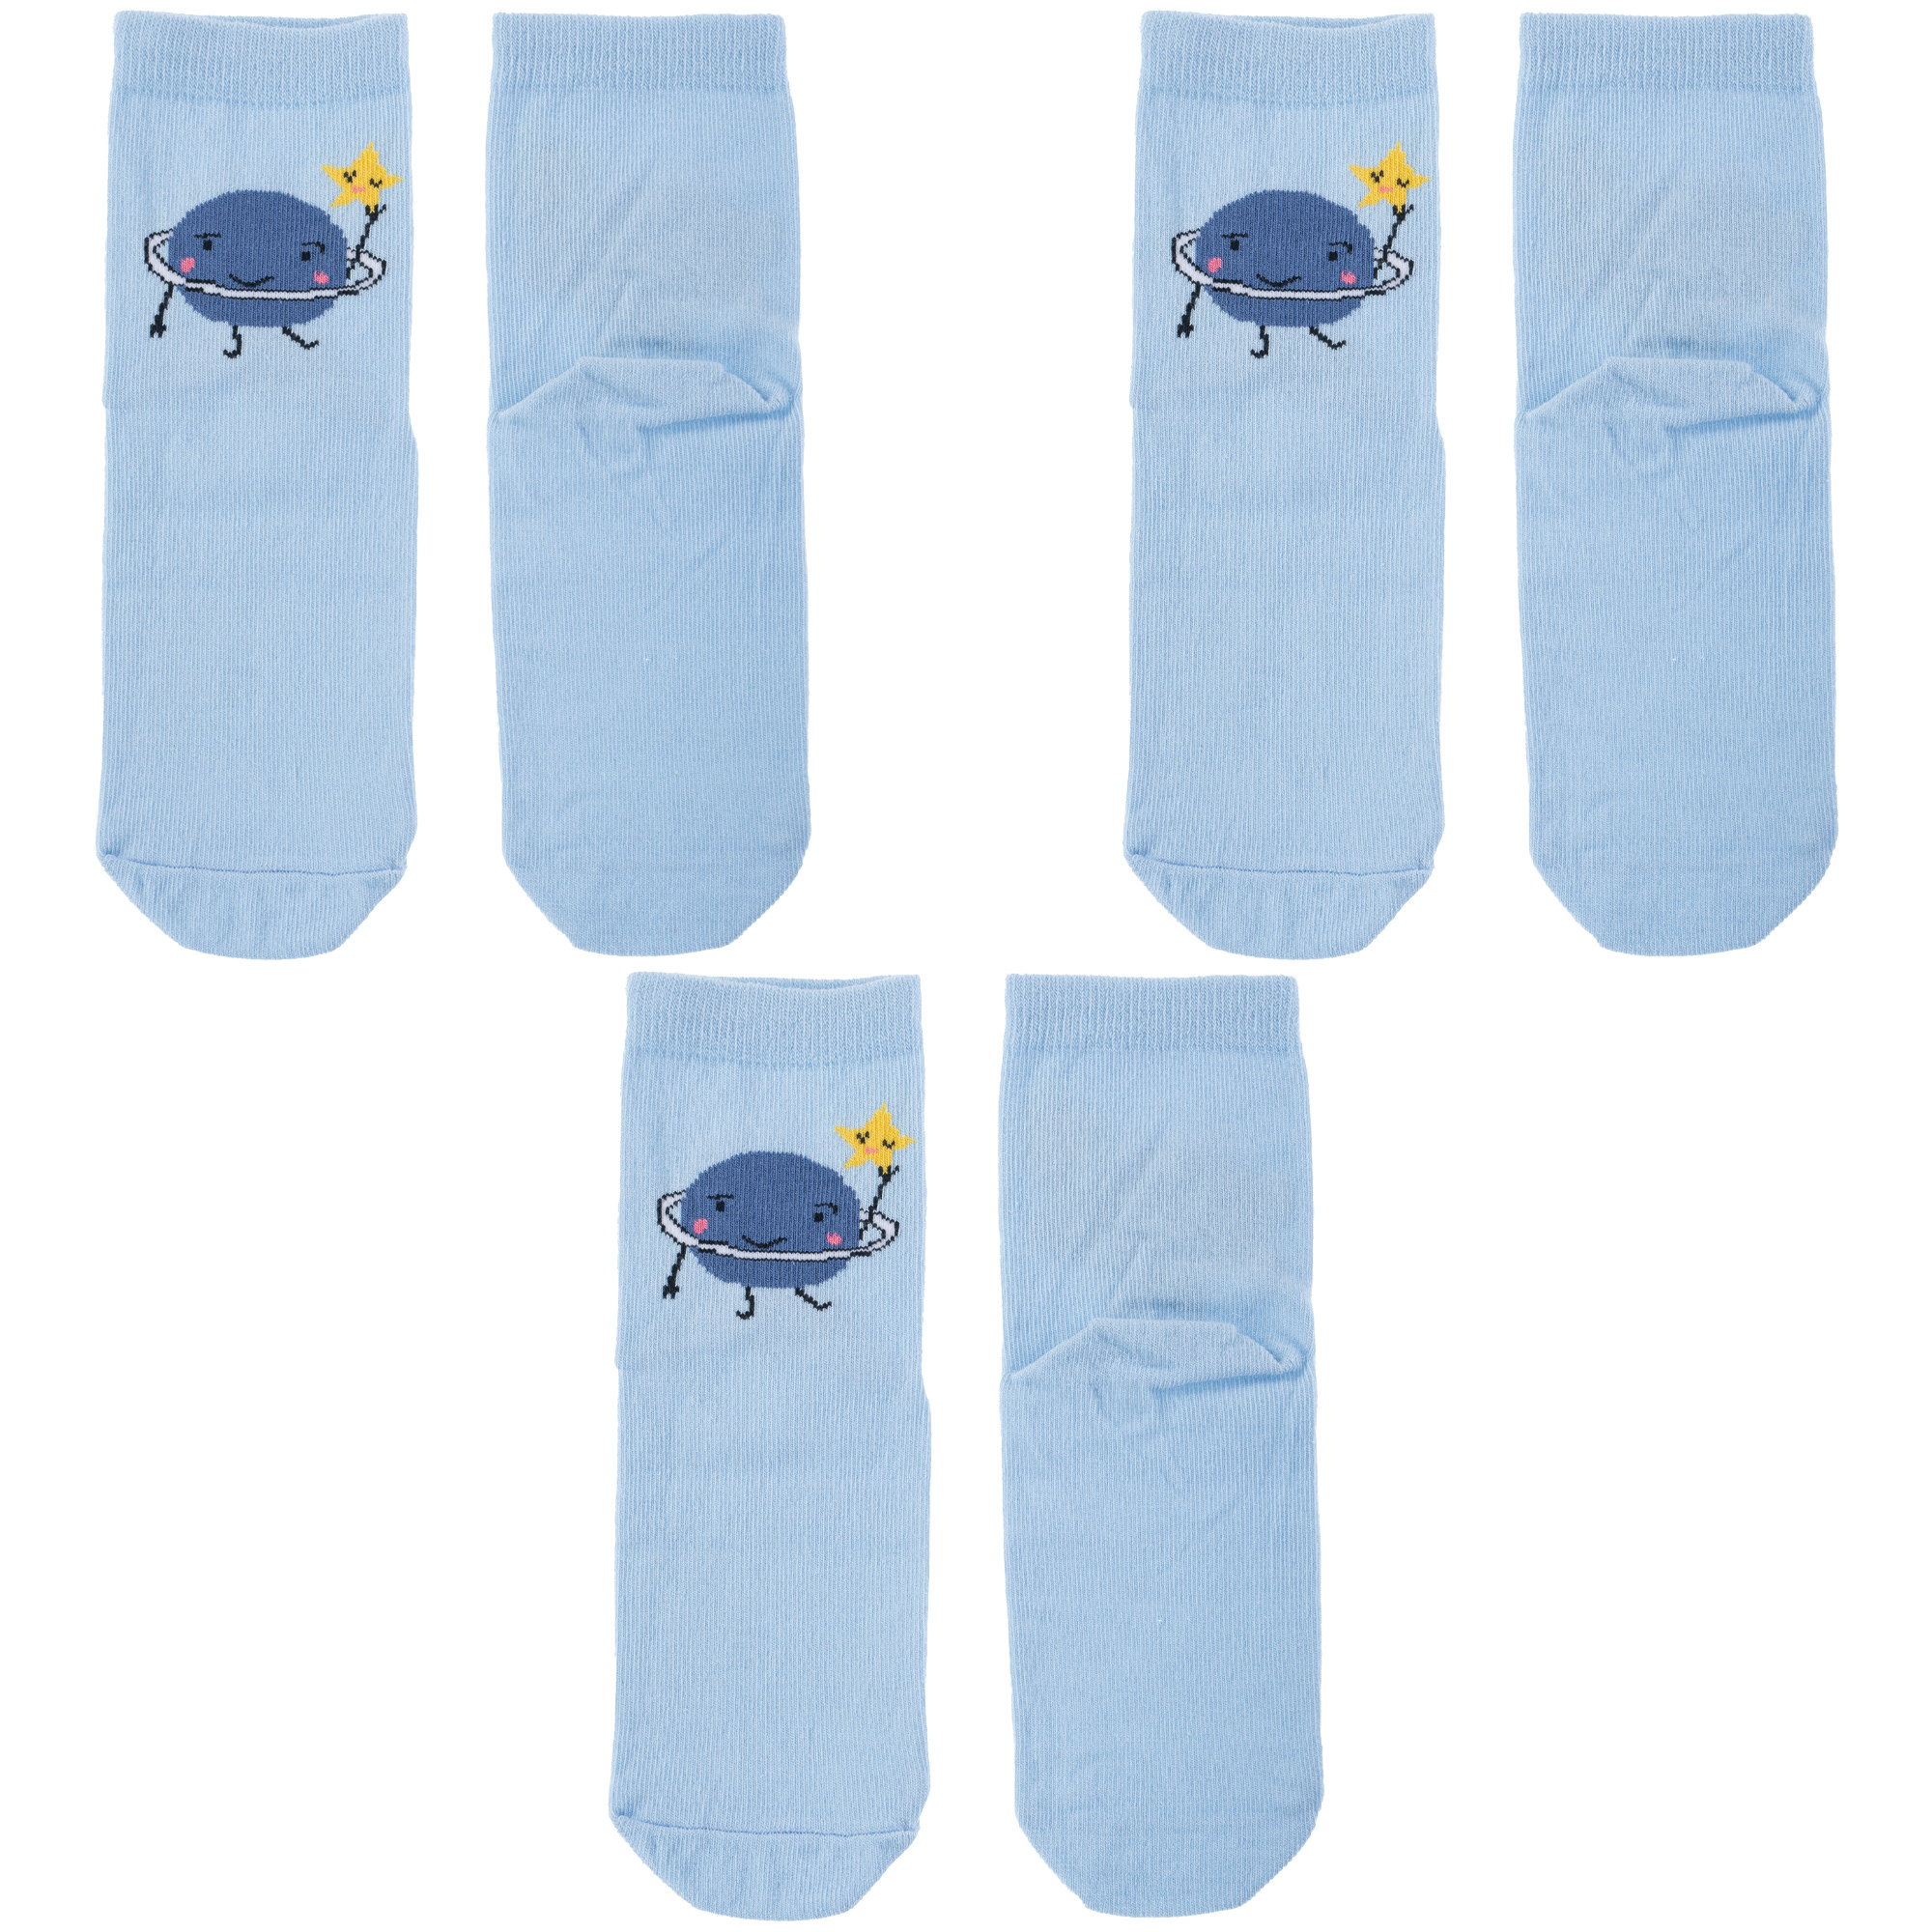 Носки детские АКОС 3-CK41800, голубые, 14-16 носки детские акос 3 ck41800 голубые 14 16